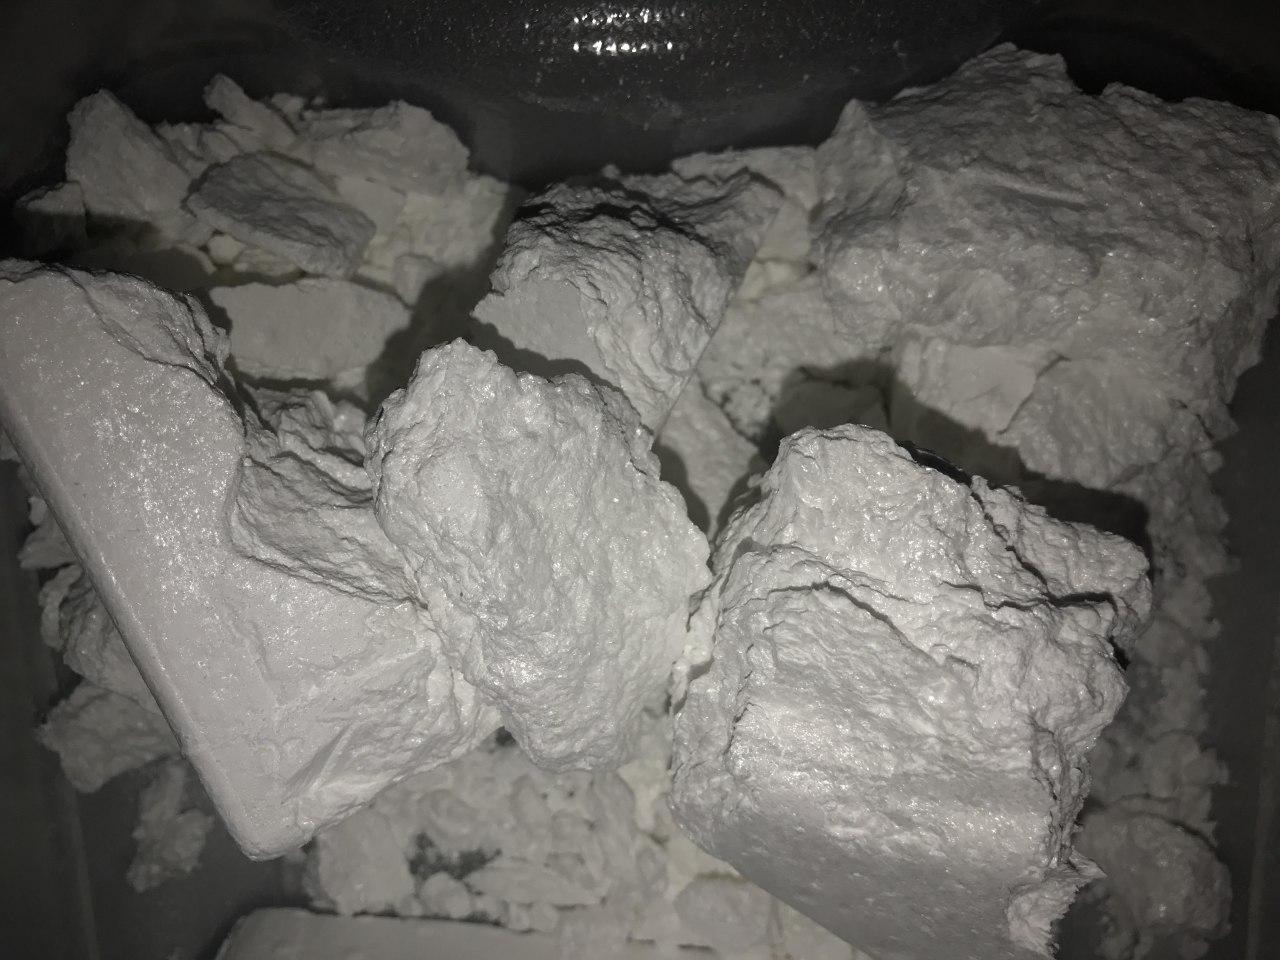 Bio Cocaine For Sale